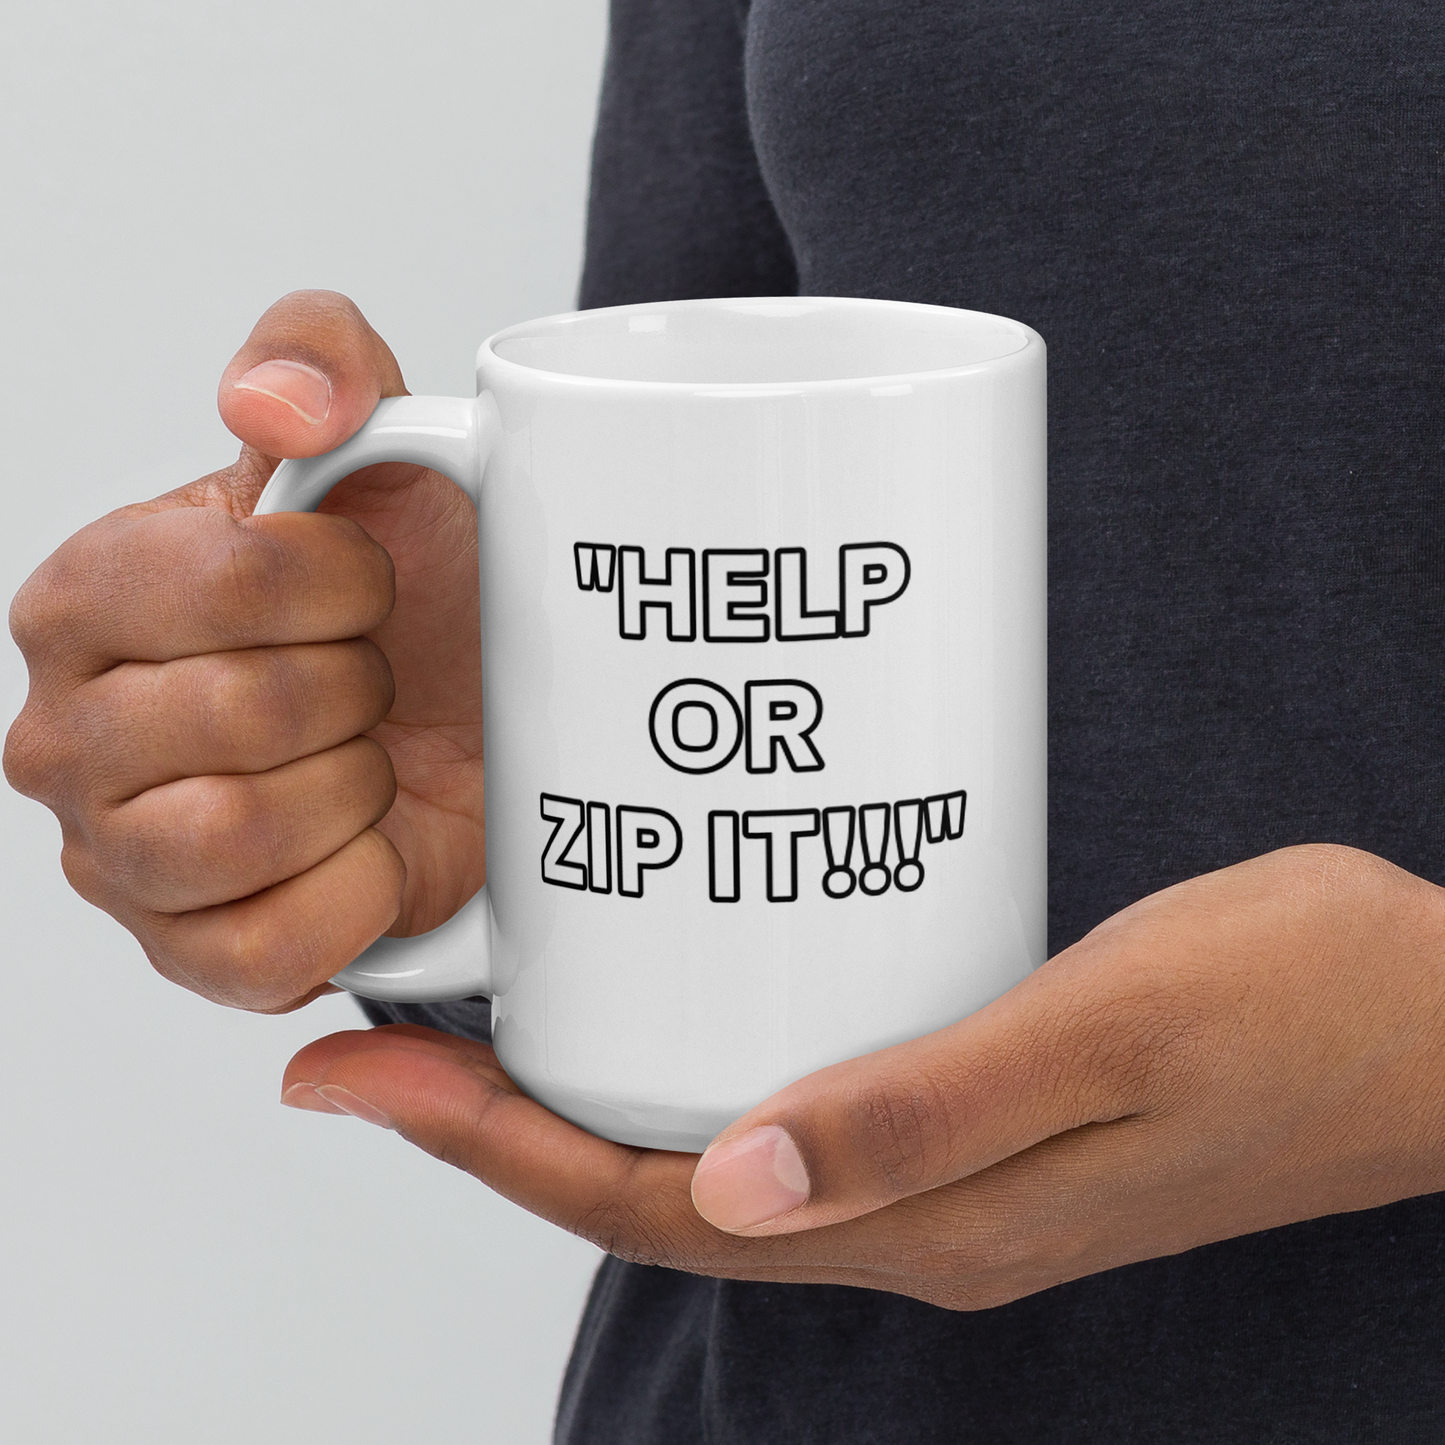 Help or Zip It White Mug